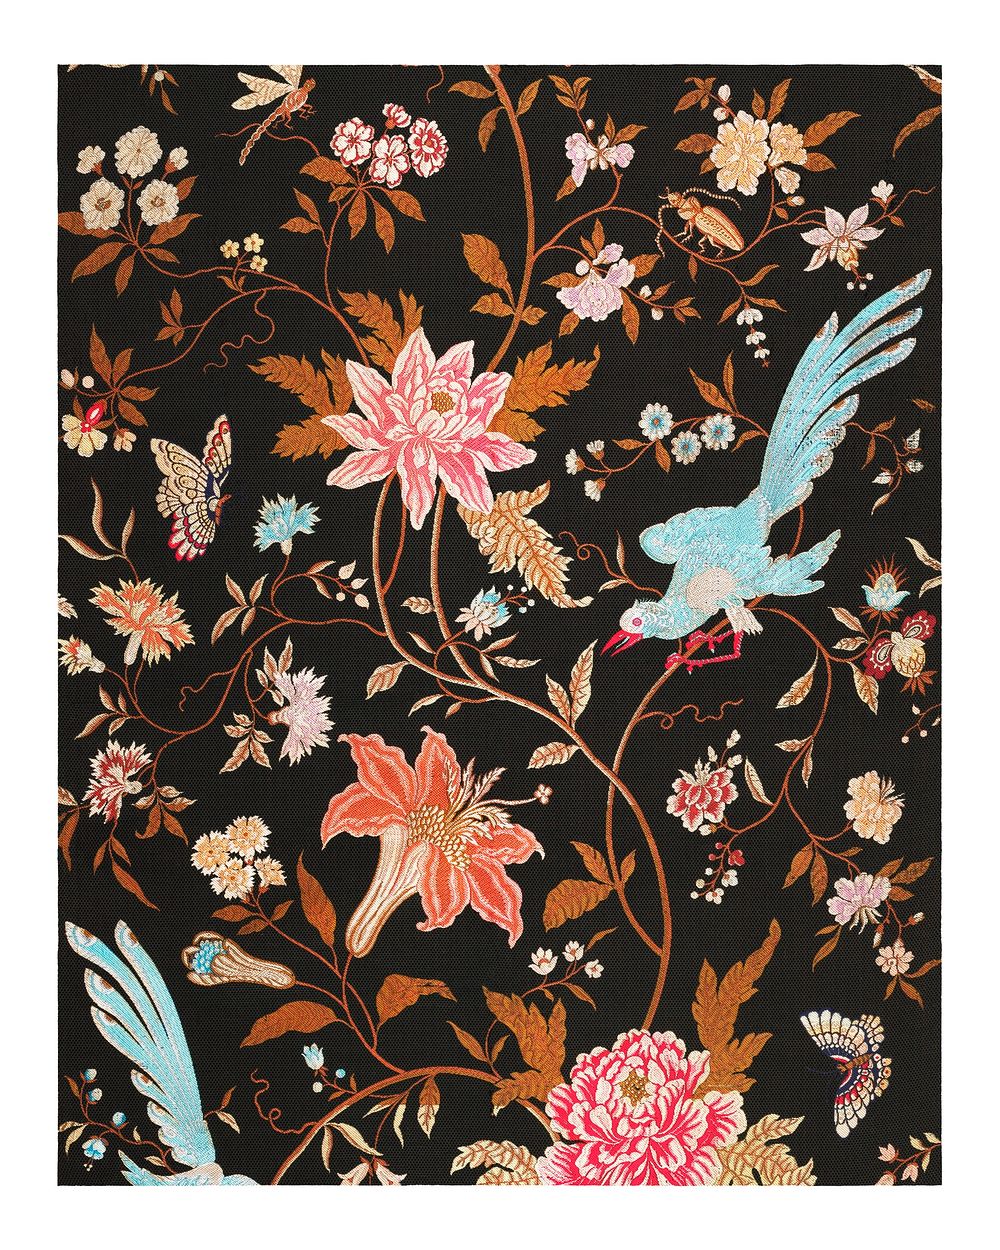 Flower pattern painting, vintage floral woven textiles, digitally enhanced public domain artwork